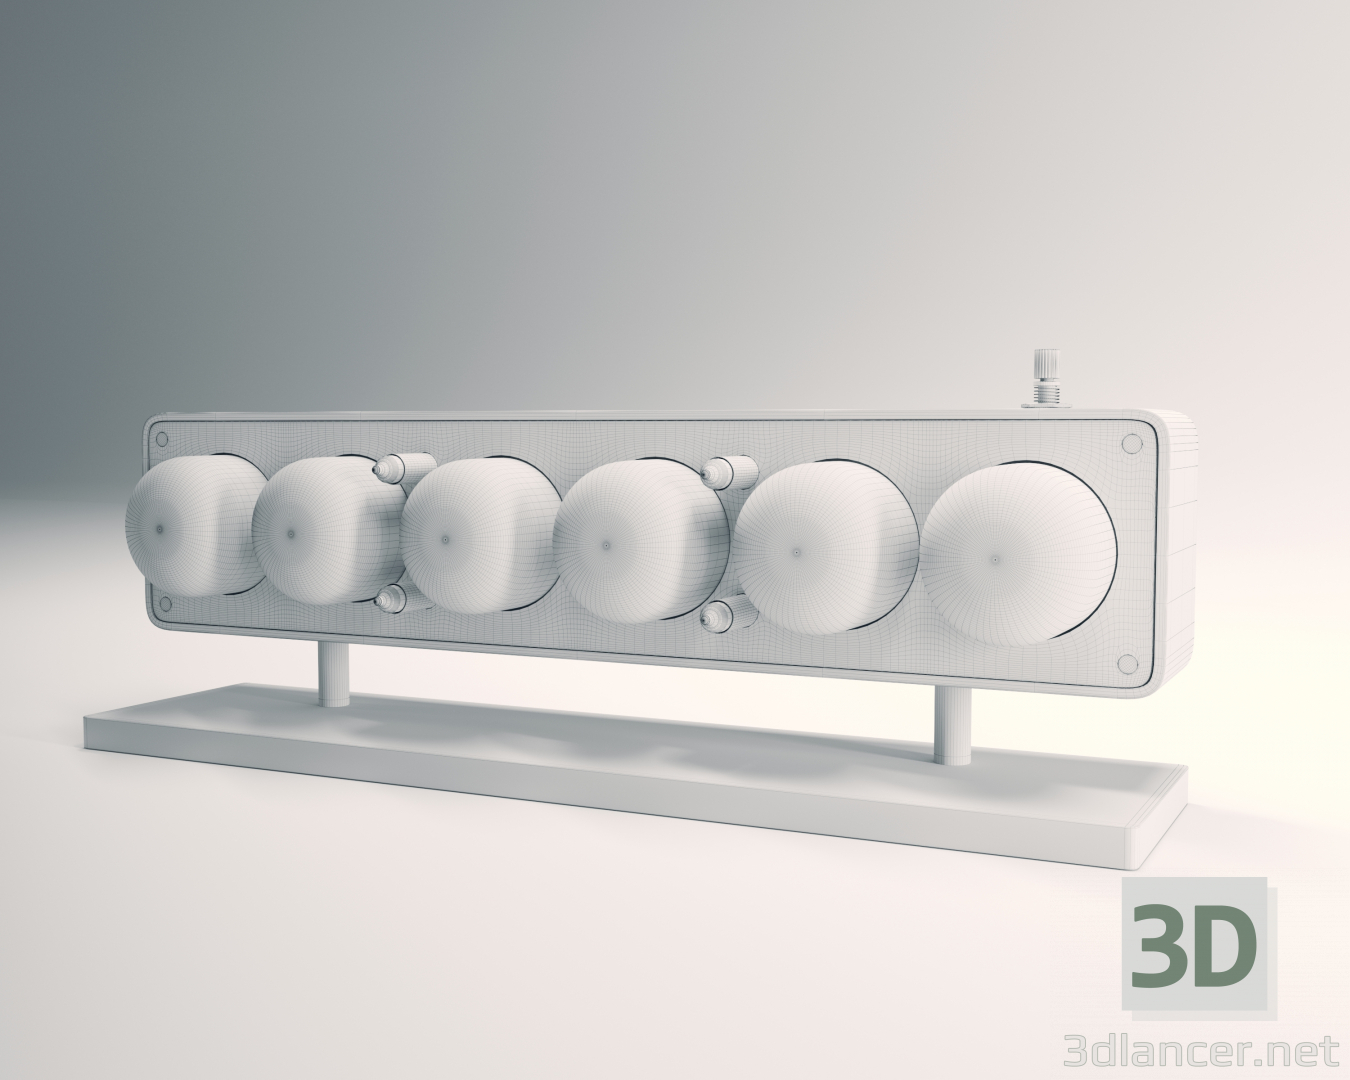 modèle 3D de Horloge sur lampes IN-4.IN4 Glow Tube Nixie Electron Tube Clock acheter - rendu